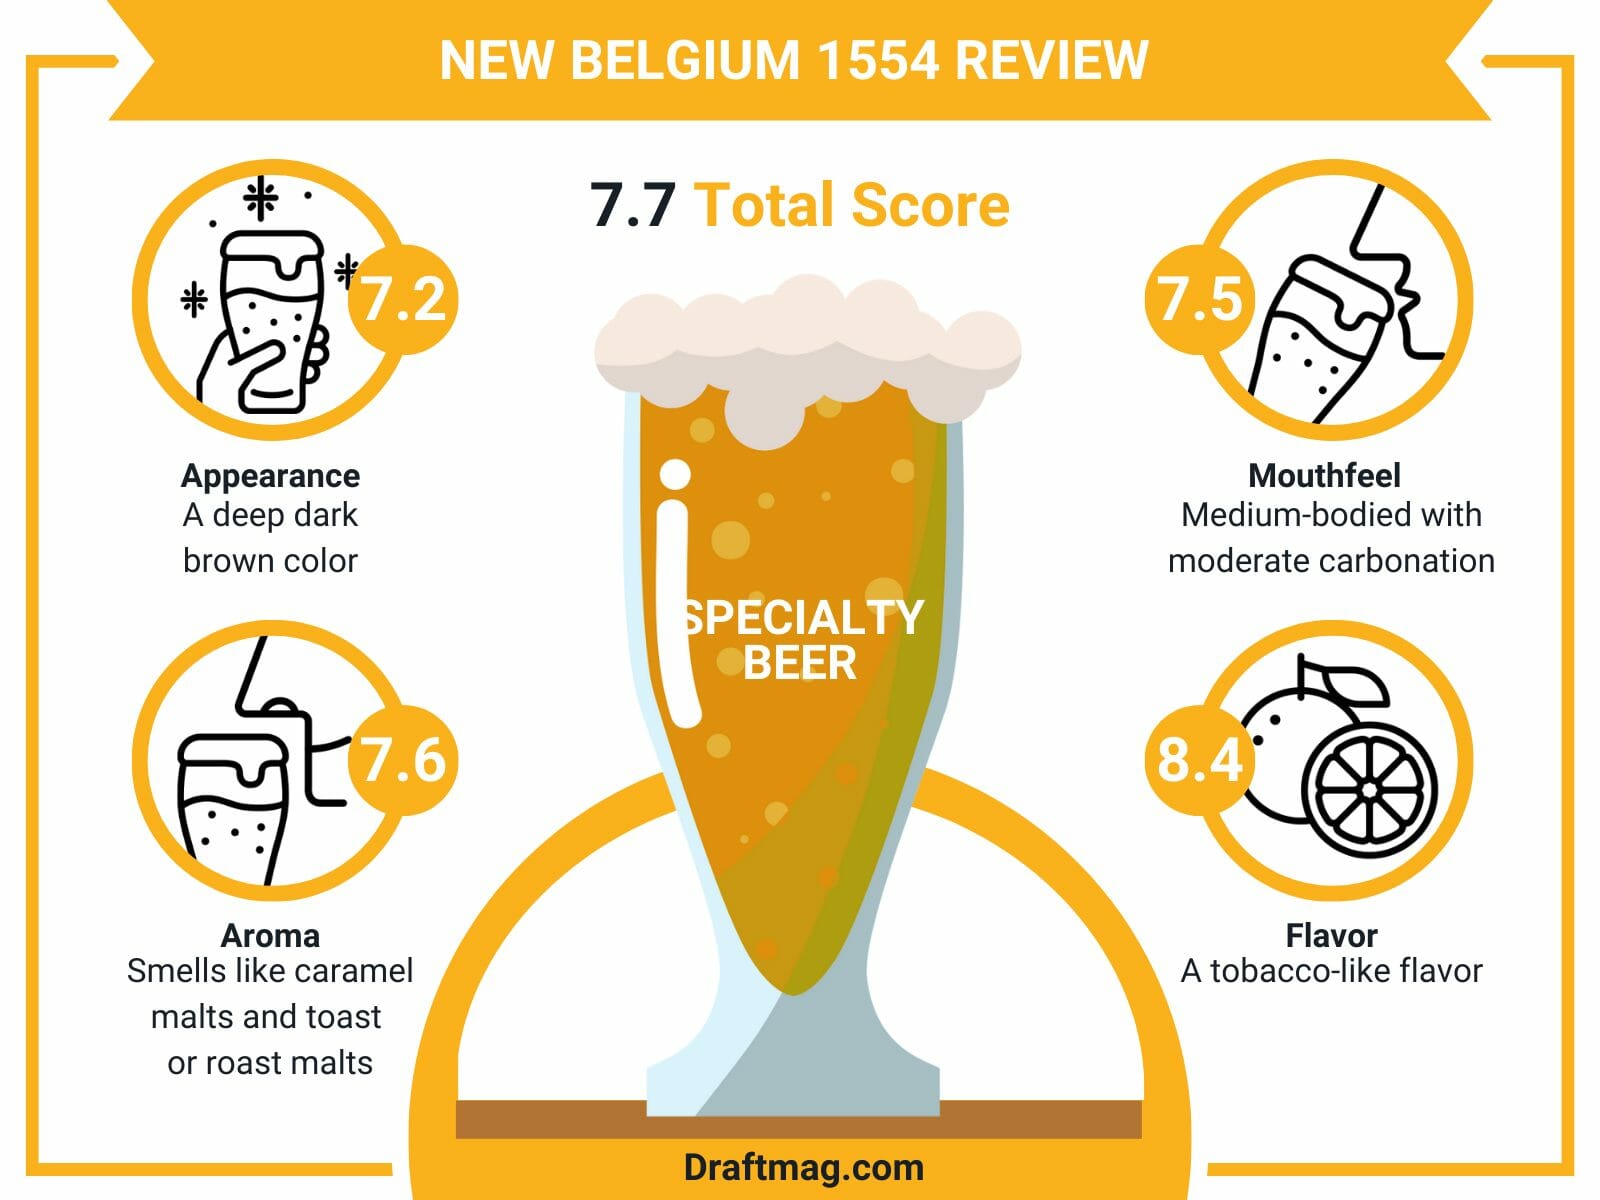 New belgium review infographic